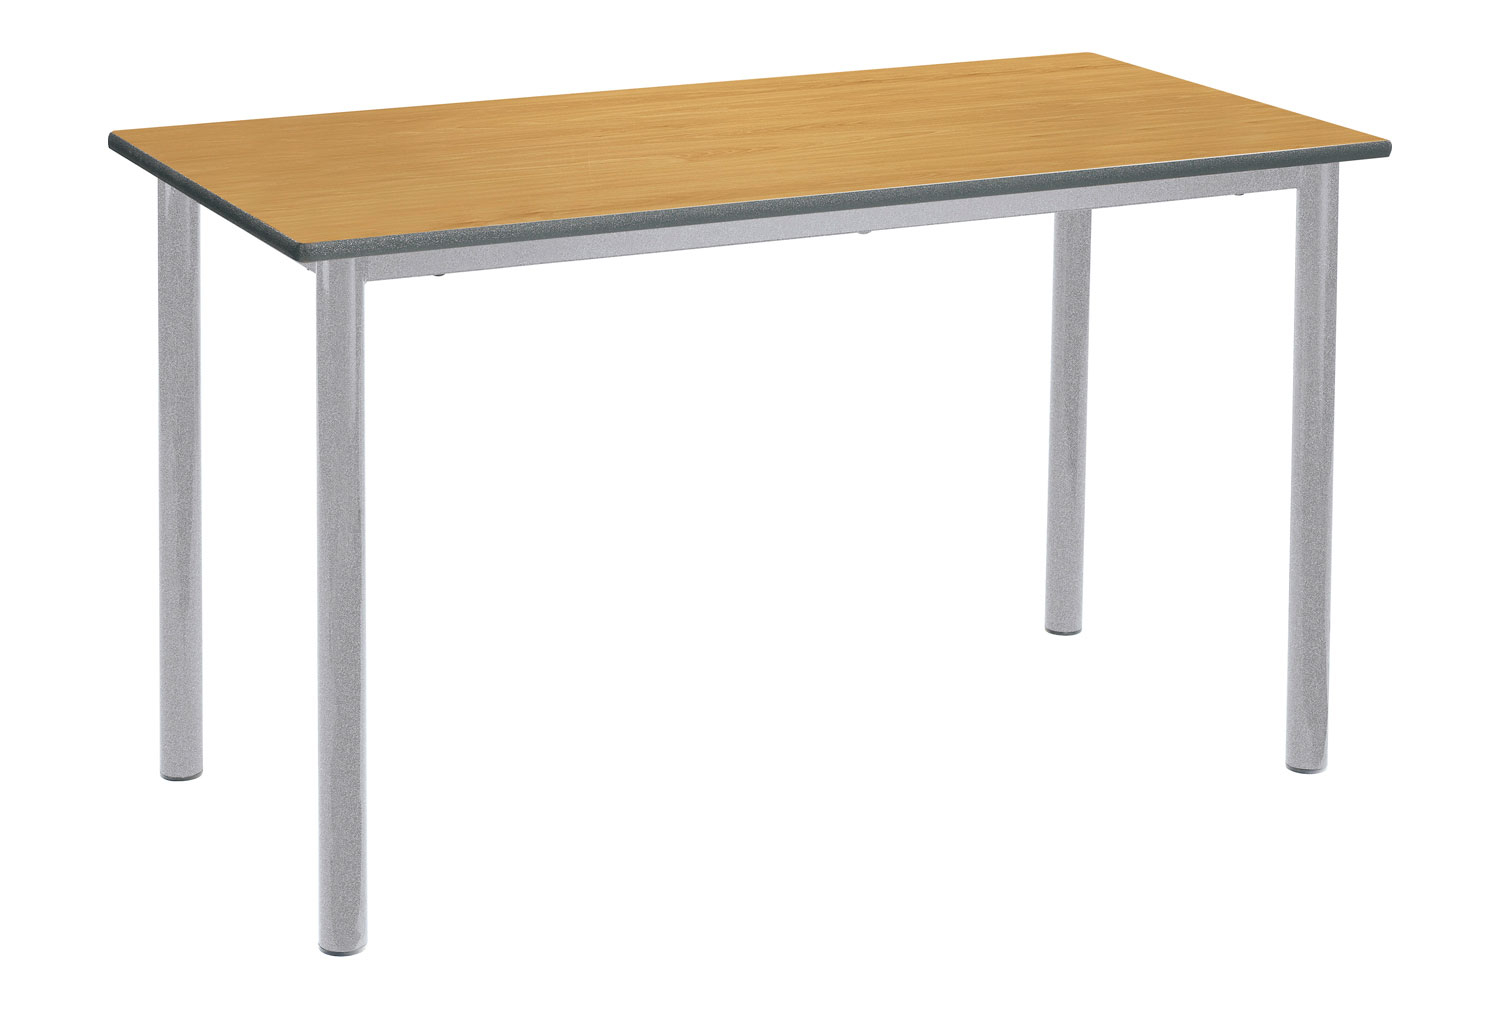 Qty 2 - RT45 Rectangular Classroom Tables 14+ Years, 110wx55dx76h (cm), Silver Frame, Beech Top, MDF Beech Edge